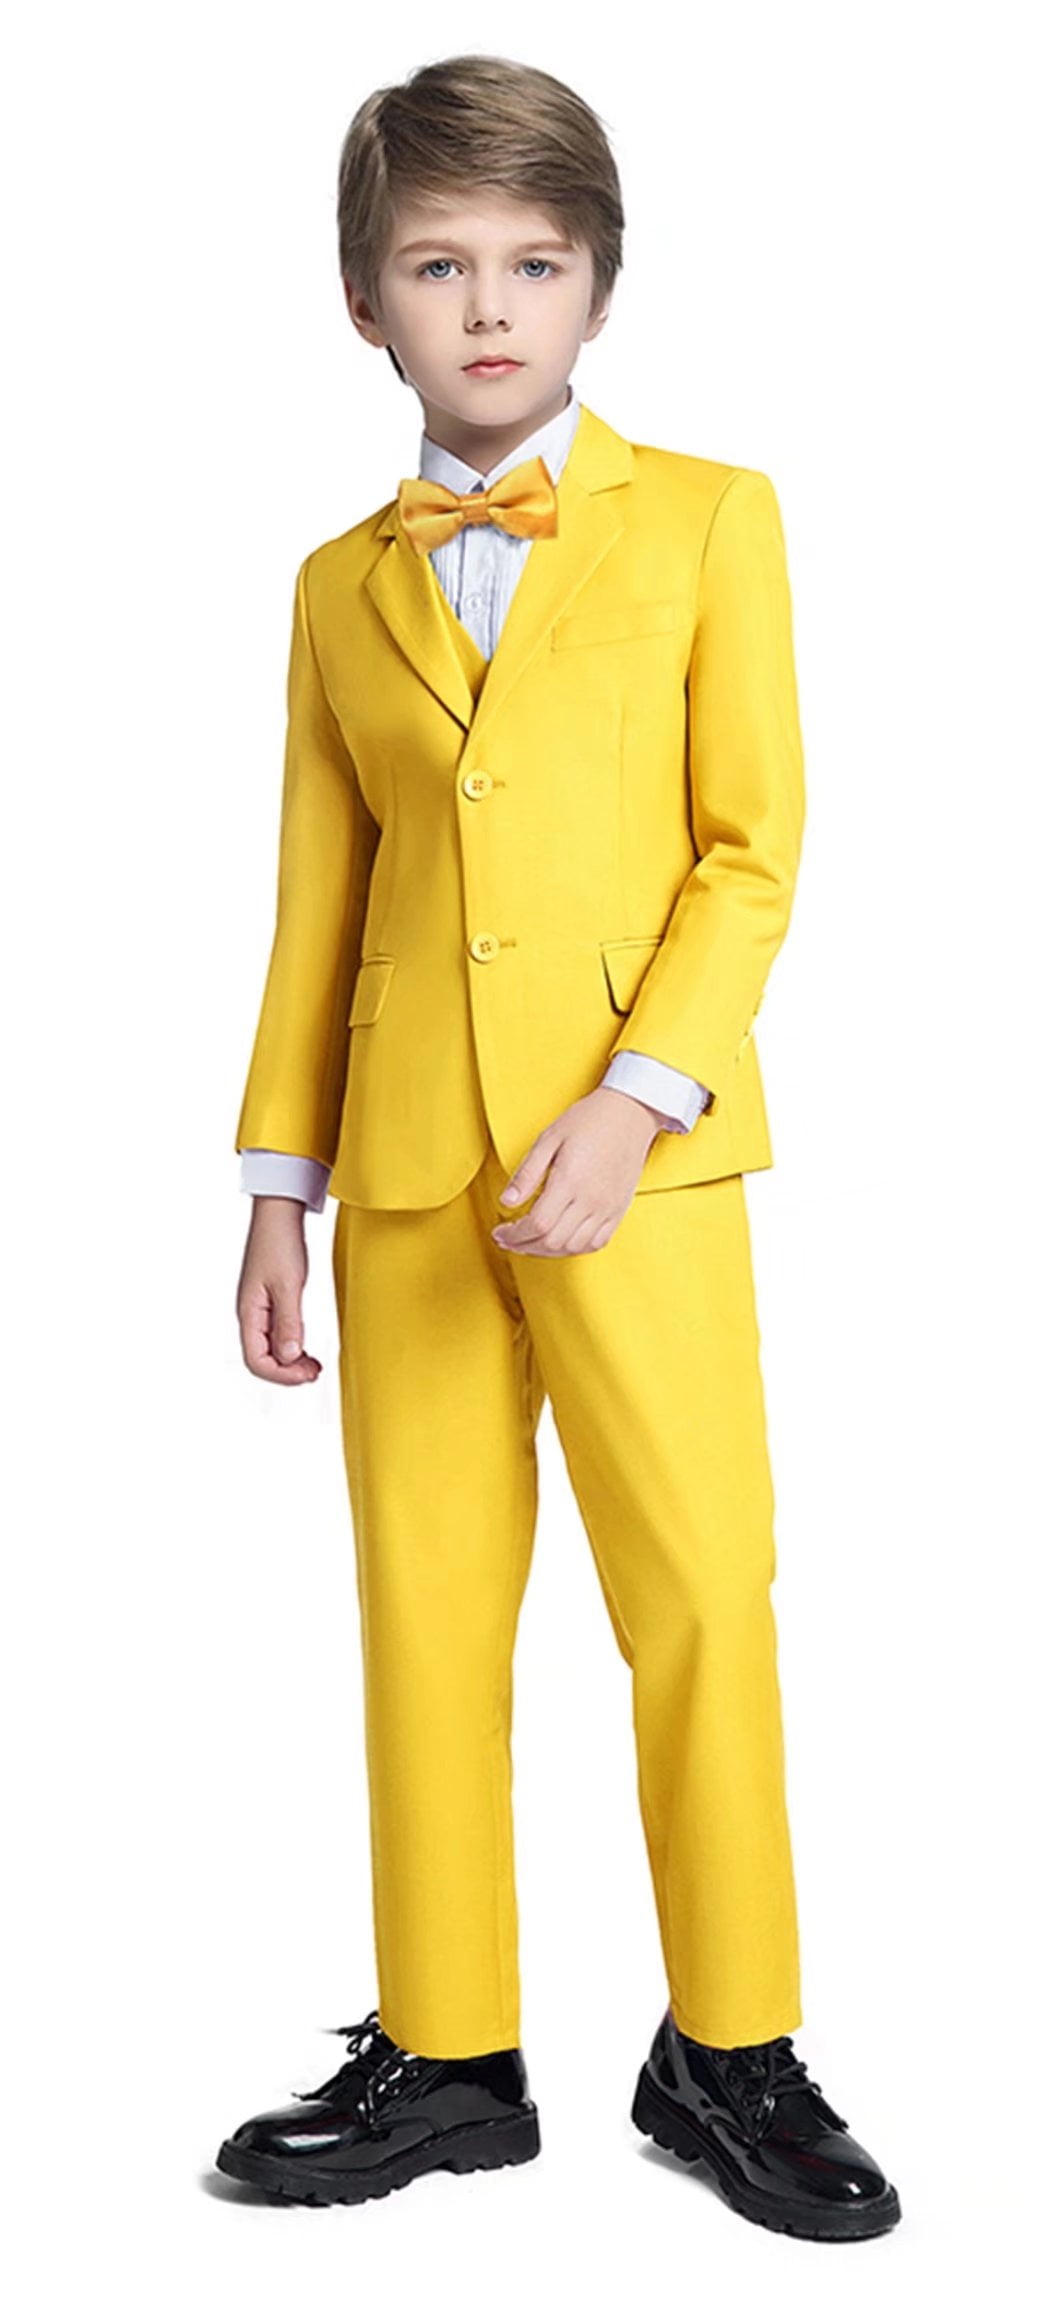 Yellow Vest Tie Set 2T-4T New Baby Boy Formal Wedding Party White Suit Tuxedo 